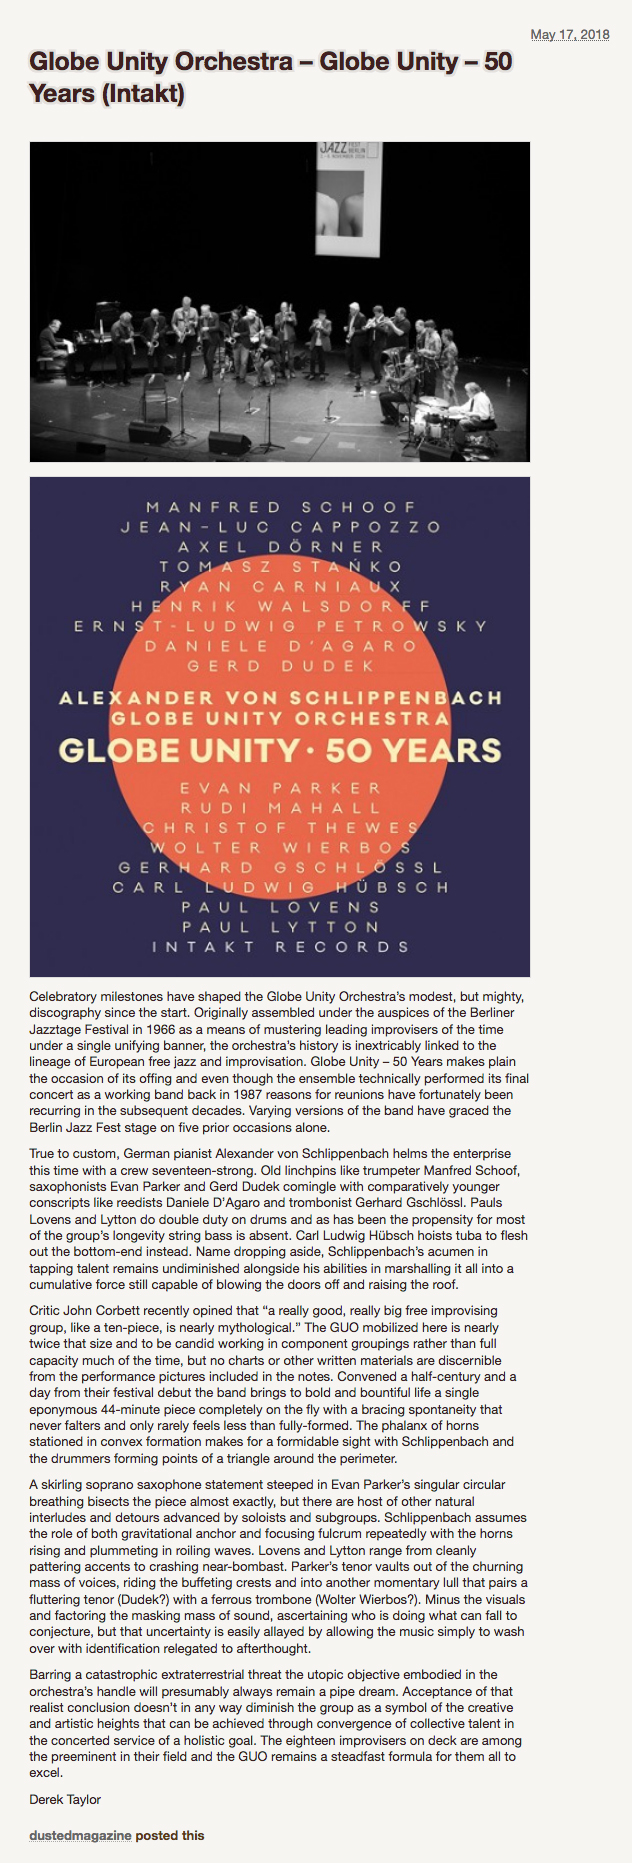 Derek Taylor reviews Globe Unity 50 